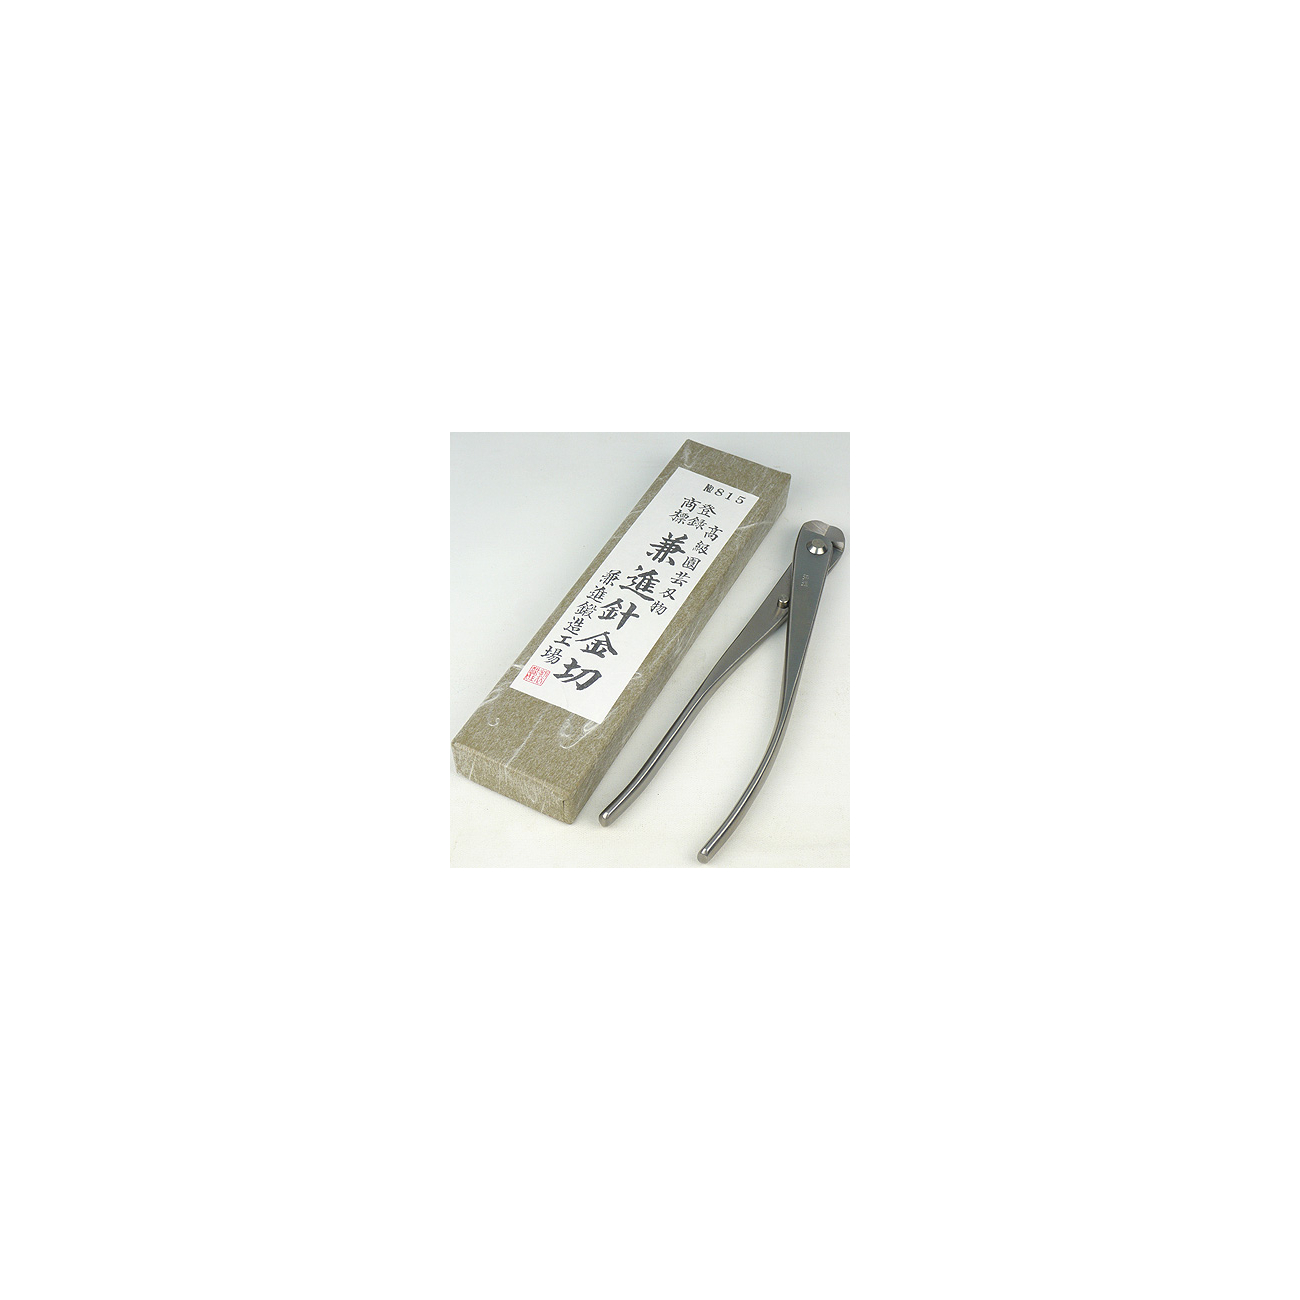 Kaneshin stainless steel wire cutter KN815  200 mm